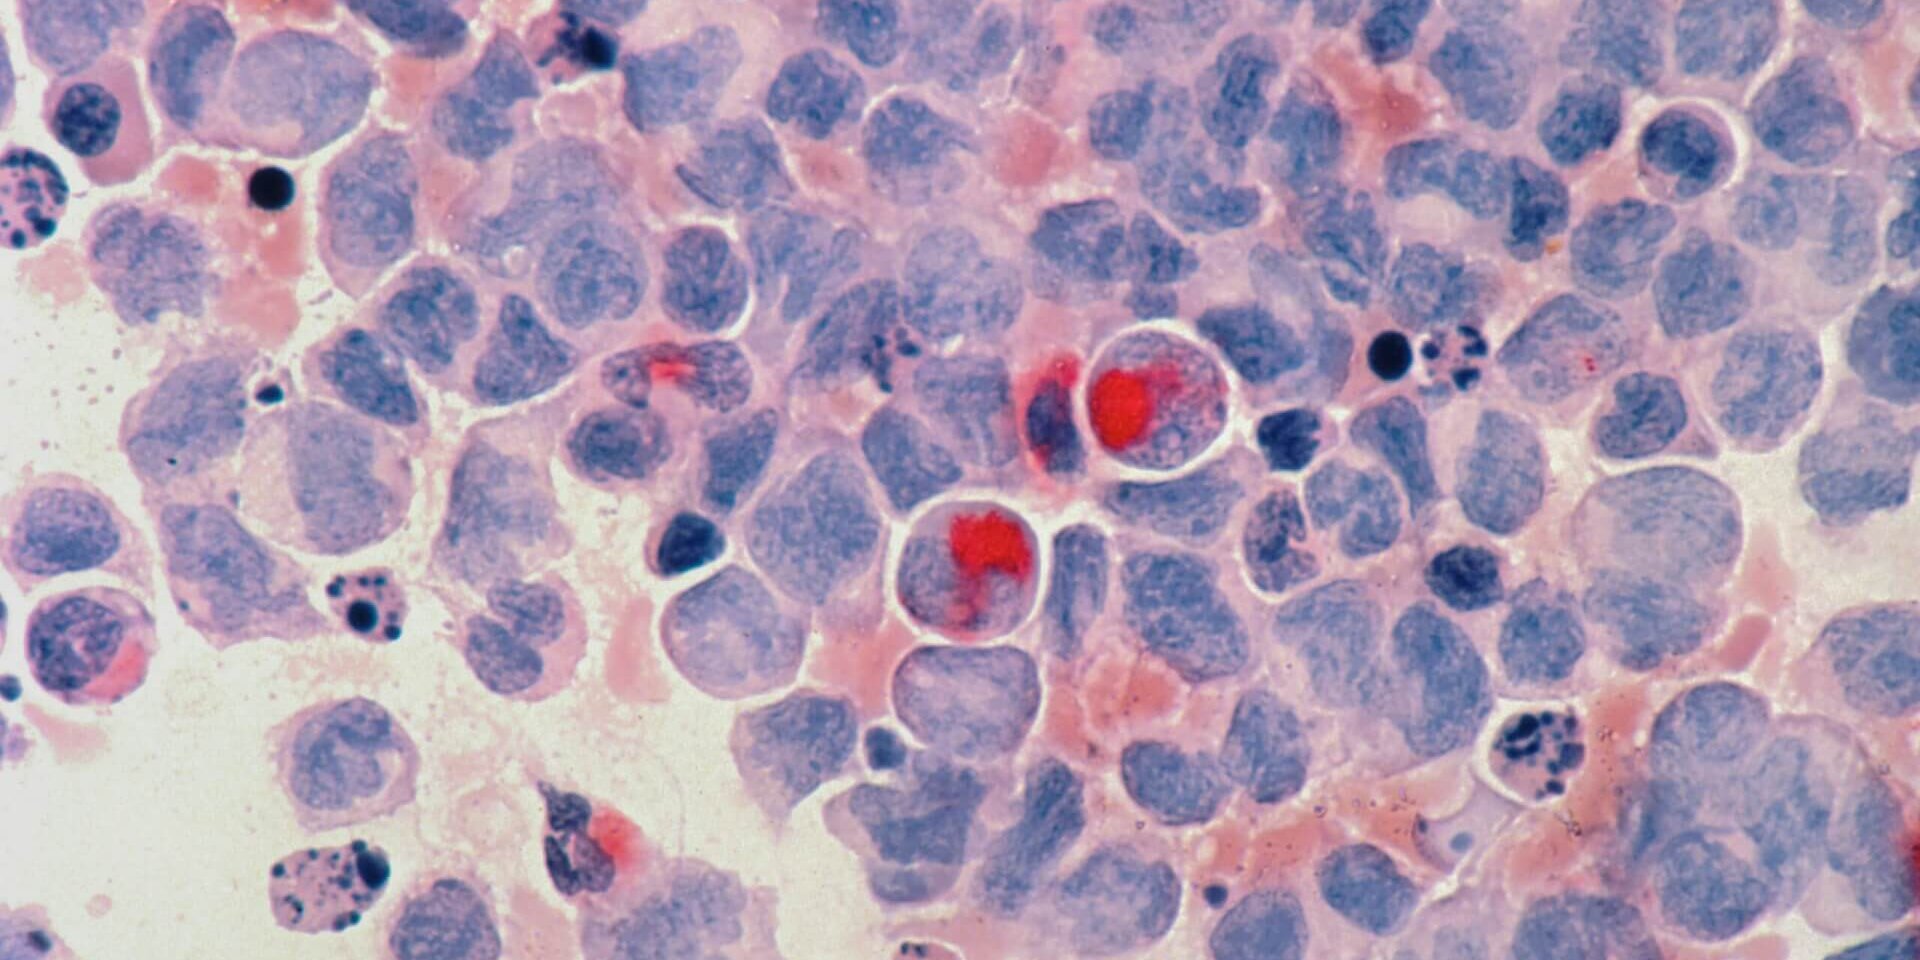 Acute myelocytic leukaemia (AML) under a microscope